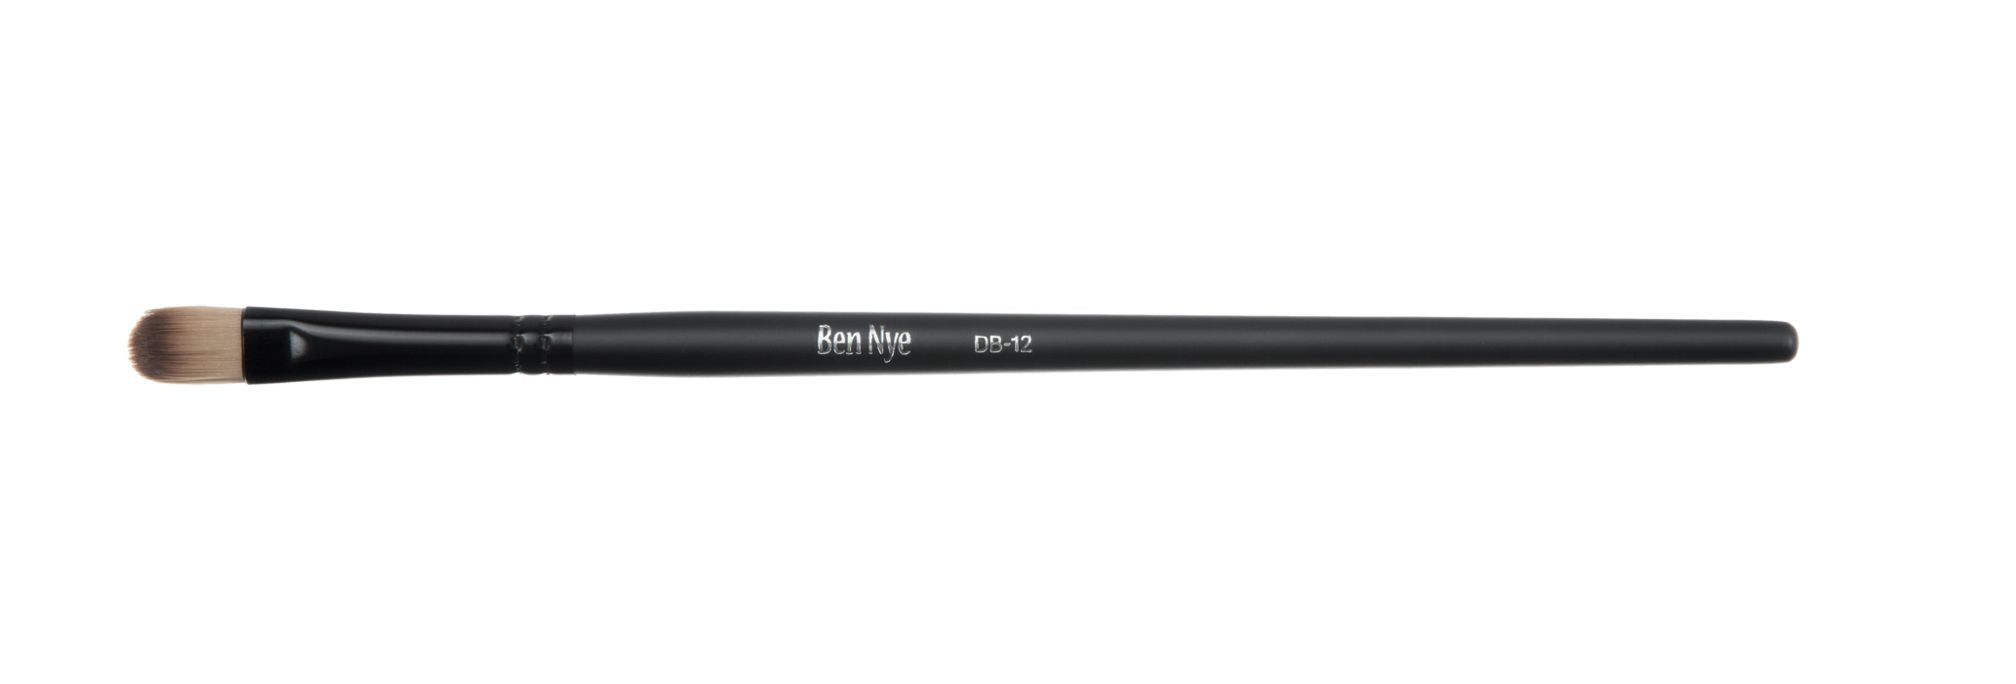 Ben Nye Dome Brush Wide peitevärisivellin (DB-12)